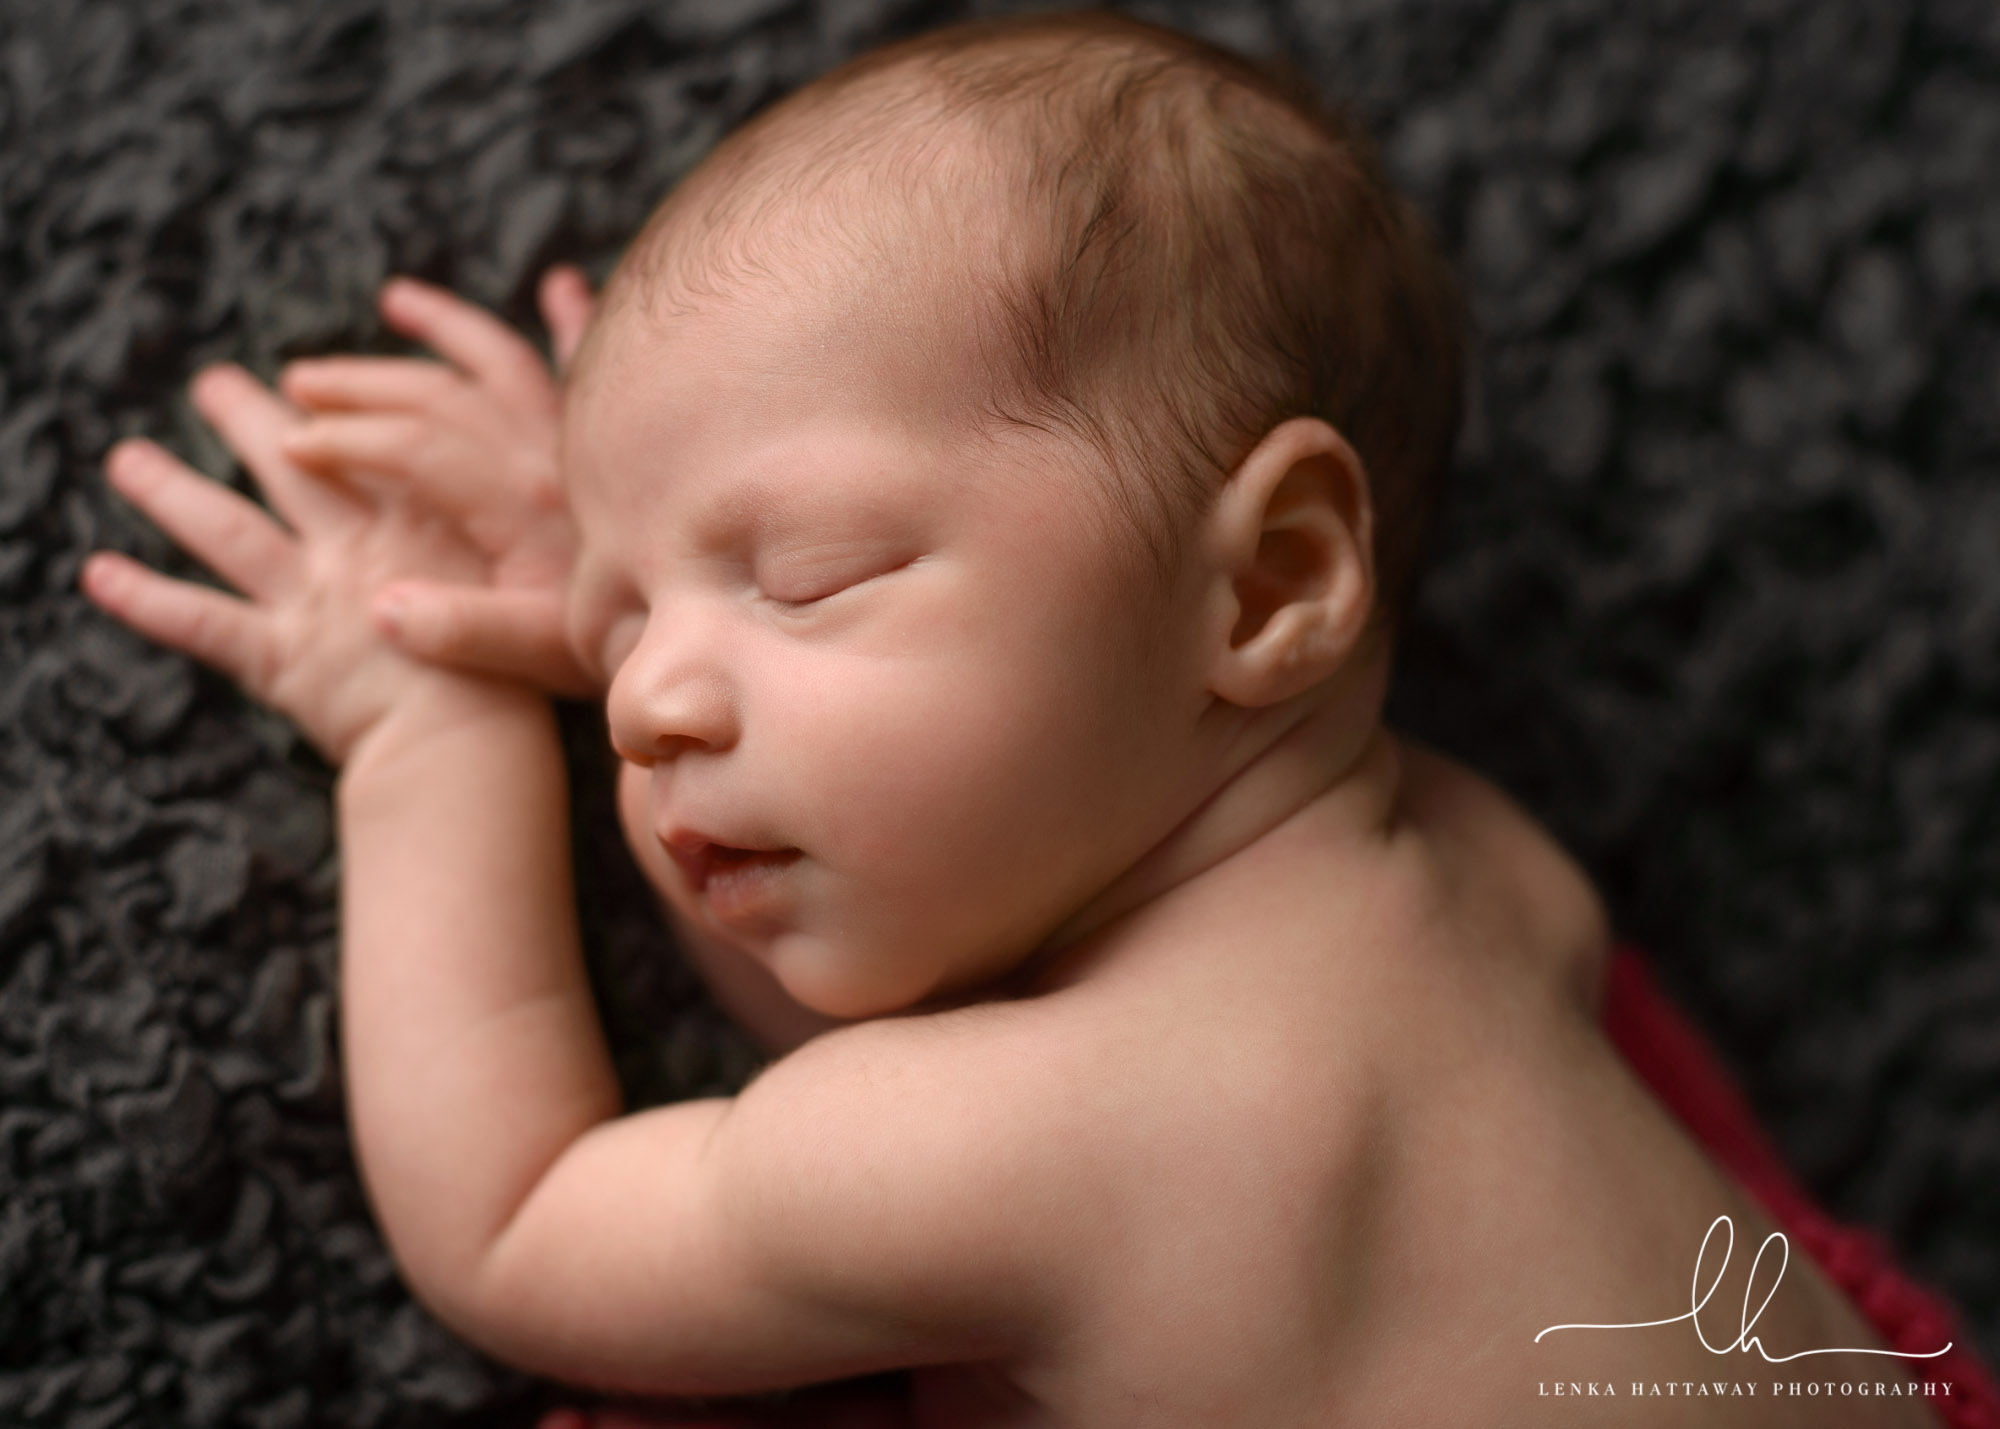 A close-up photo of a newborn baby.